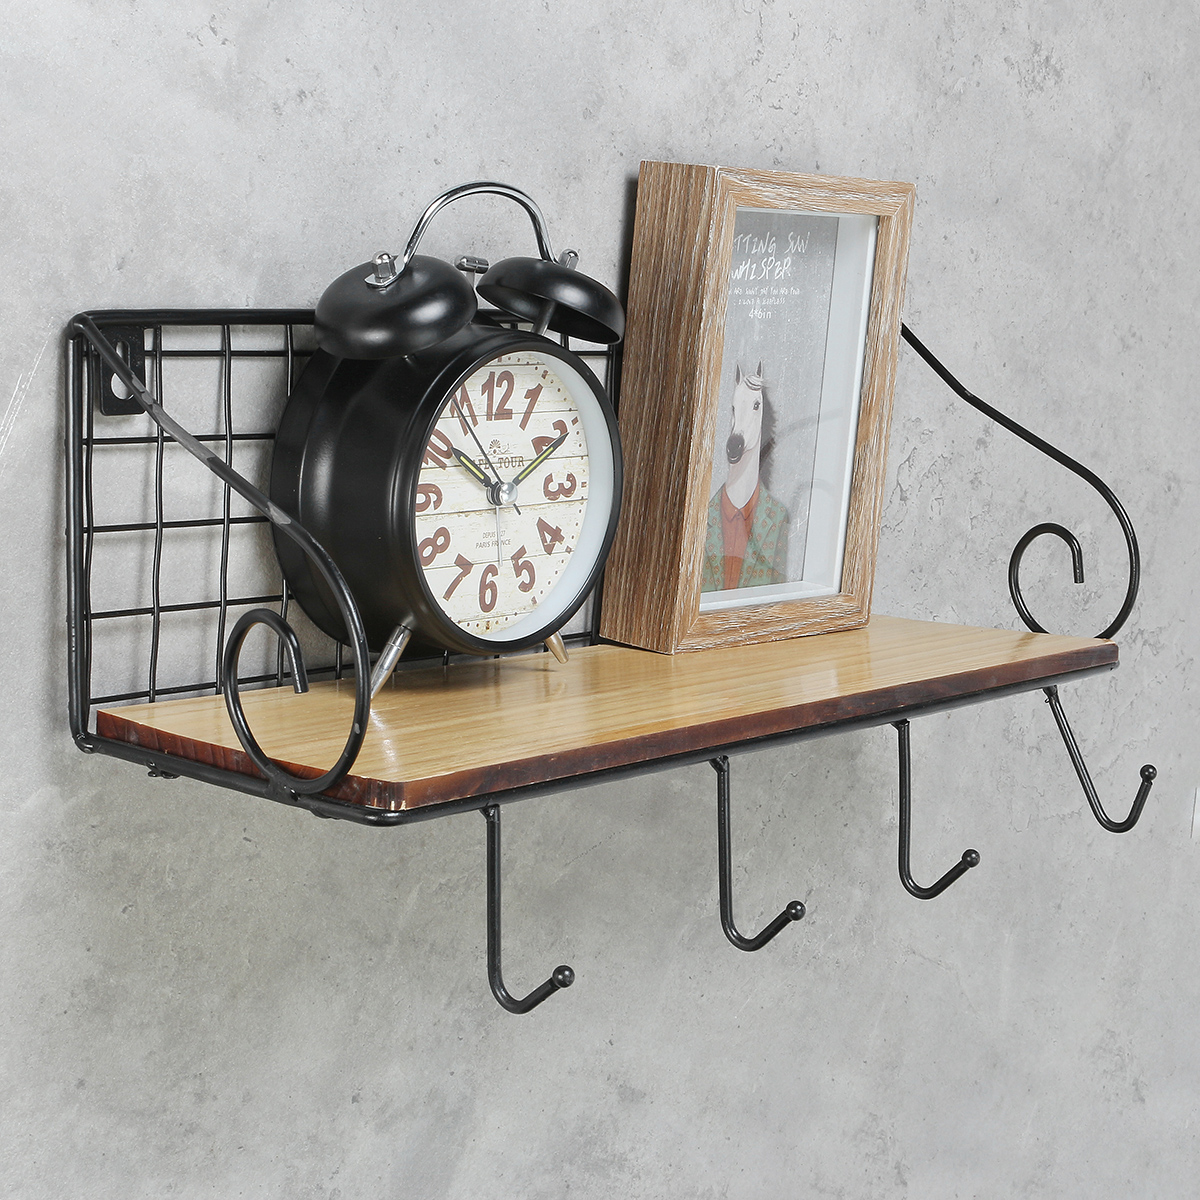 Hanging-Wall-Mounted-Rack-Storage-Organizer-Wood-Home-Display-Storage-Baskets-w-Iron-Hook-1517311-1